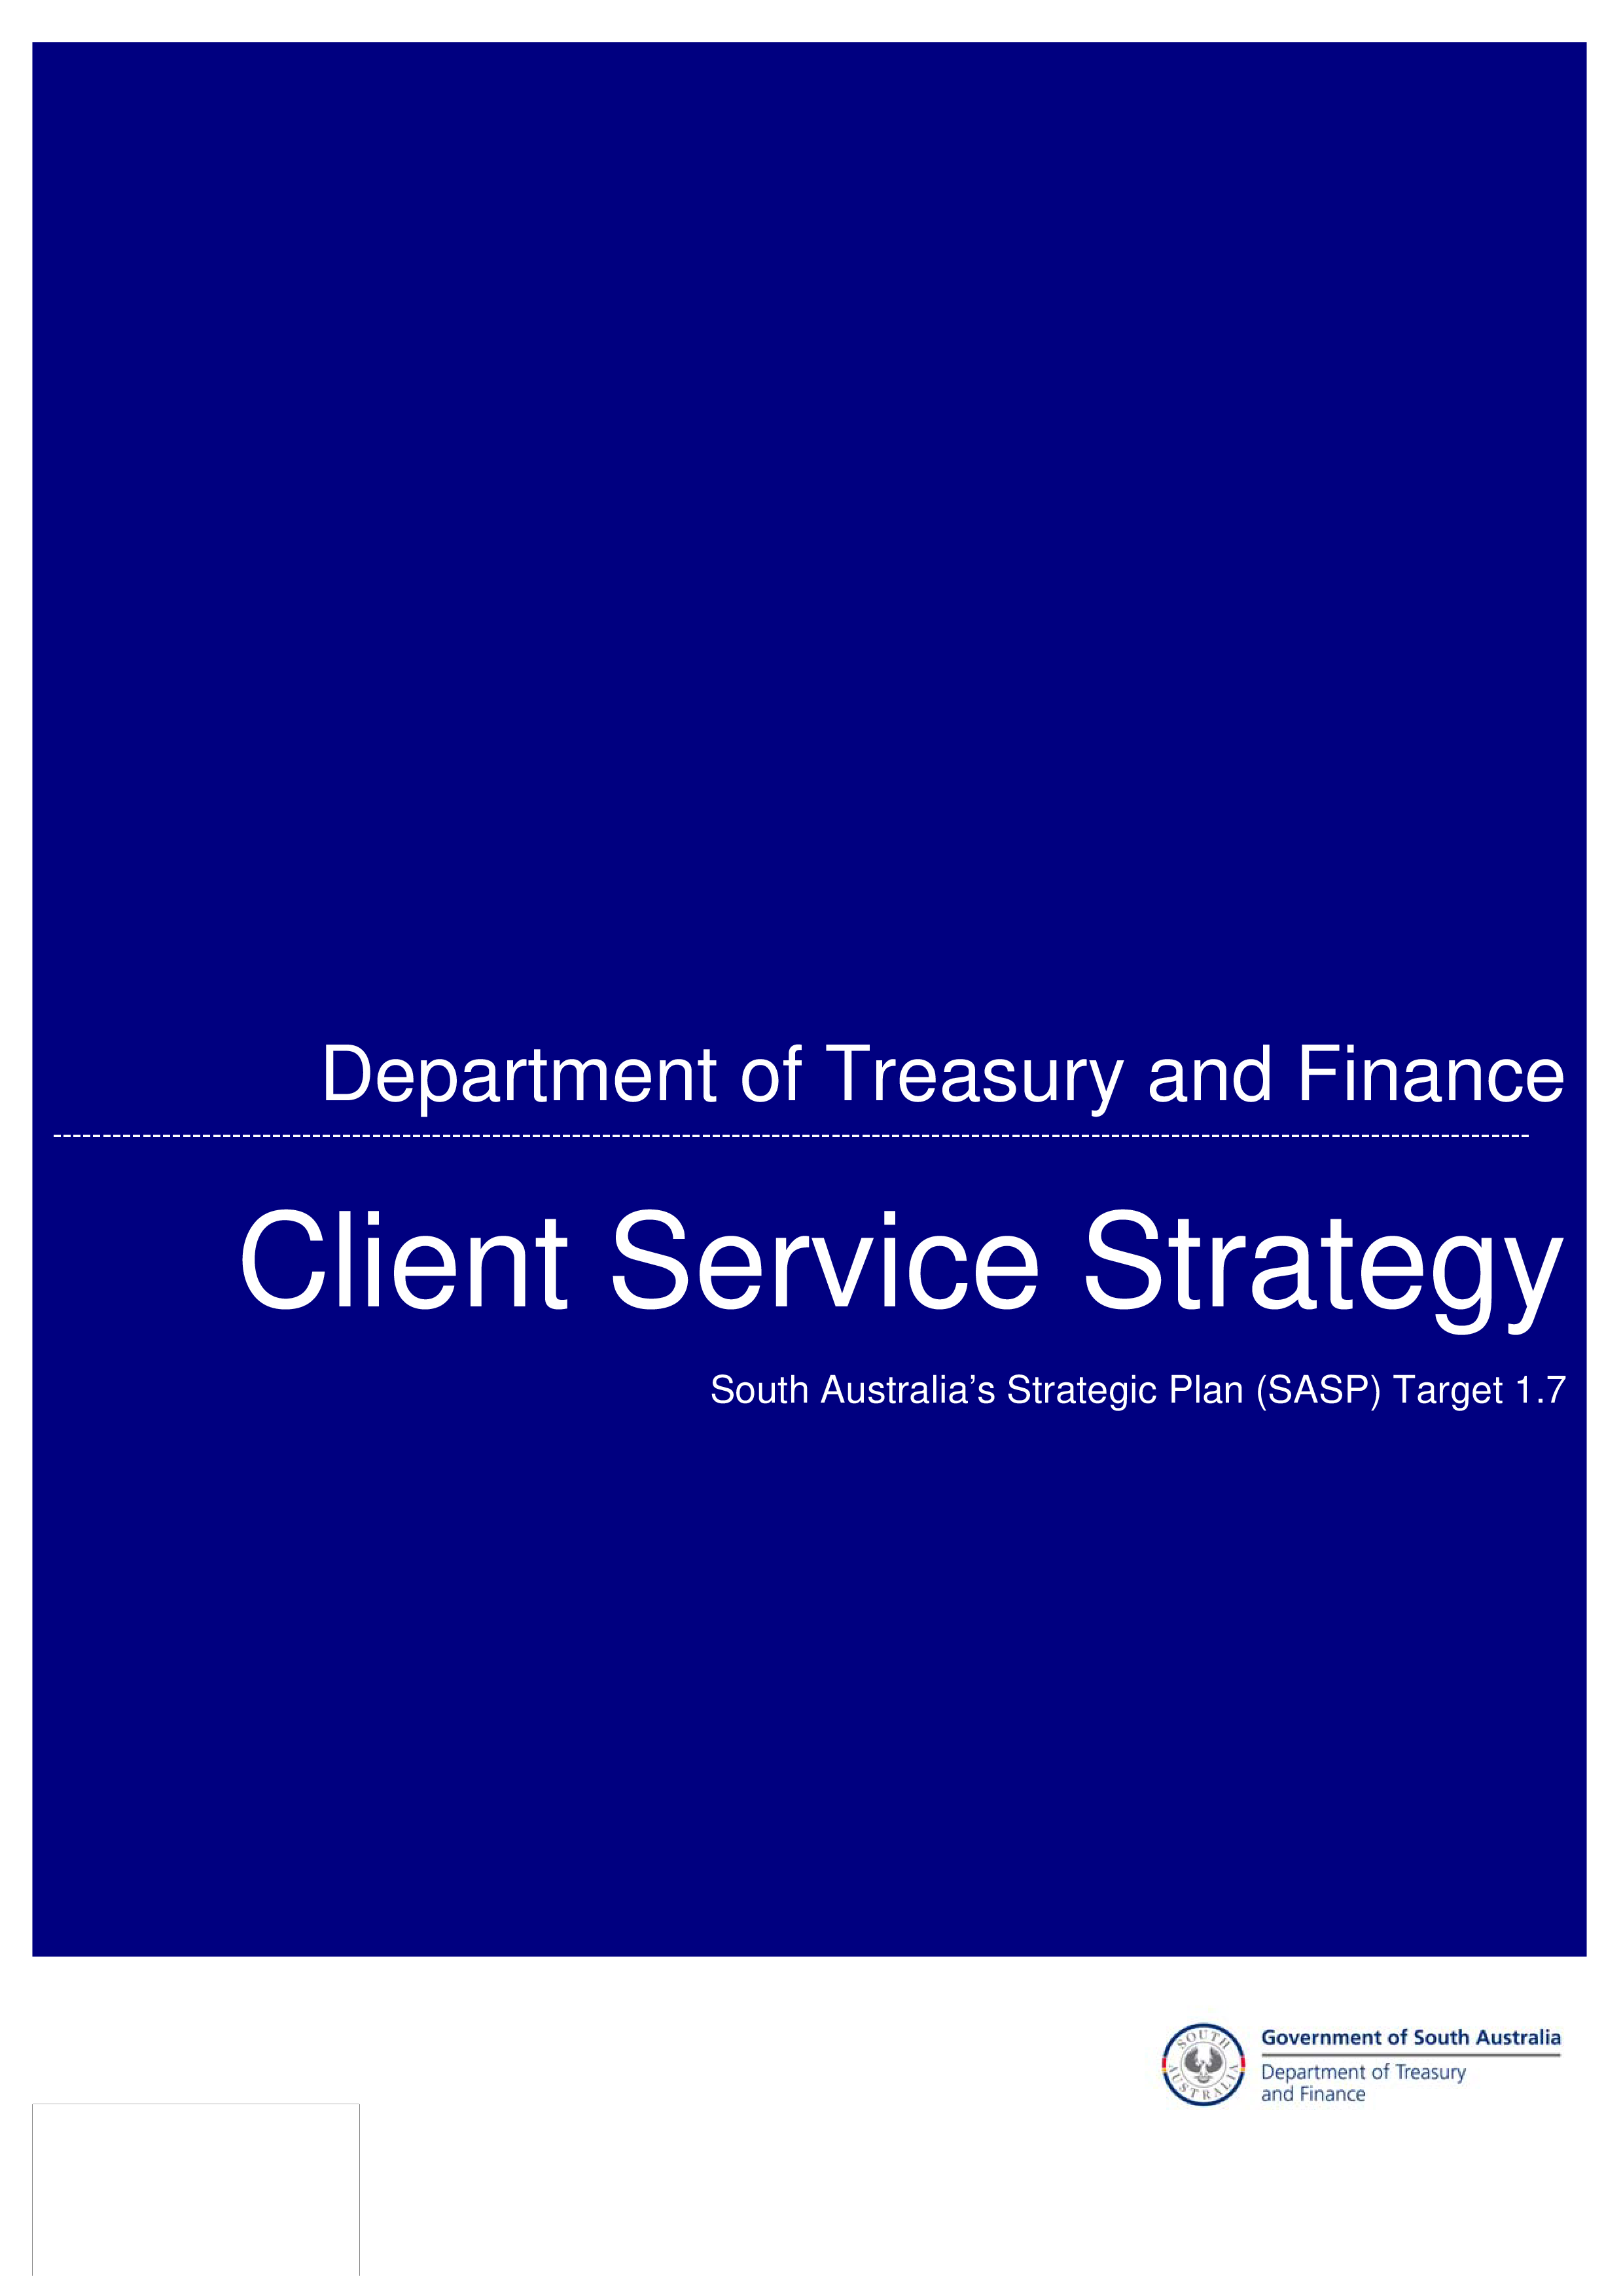 client service strategy plantilla imagen principal